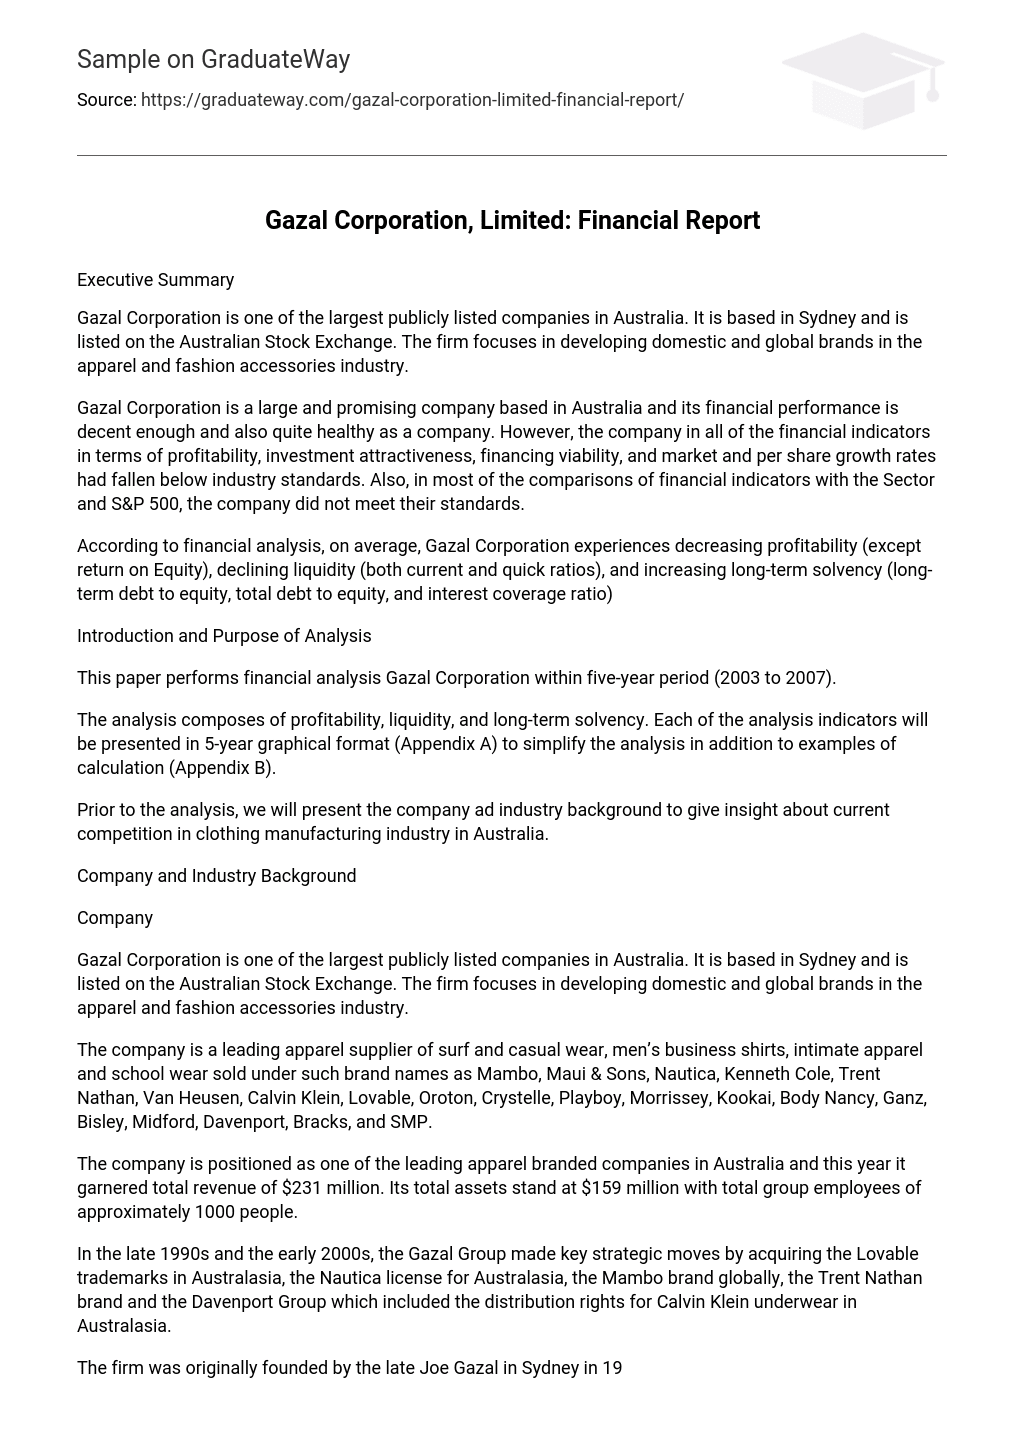 Gazal Corporation, Limited: Financial Report